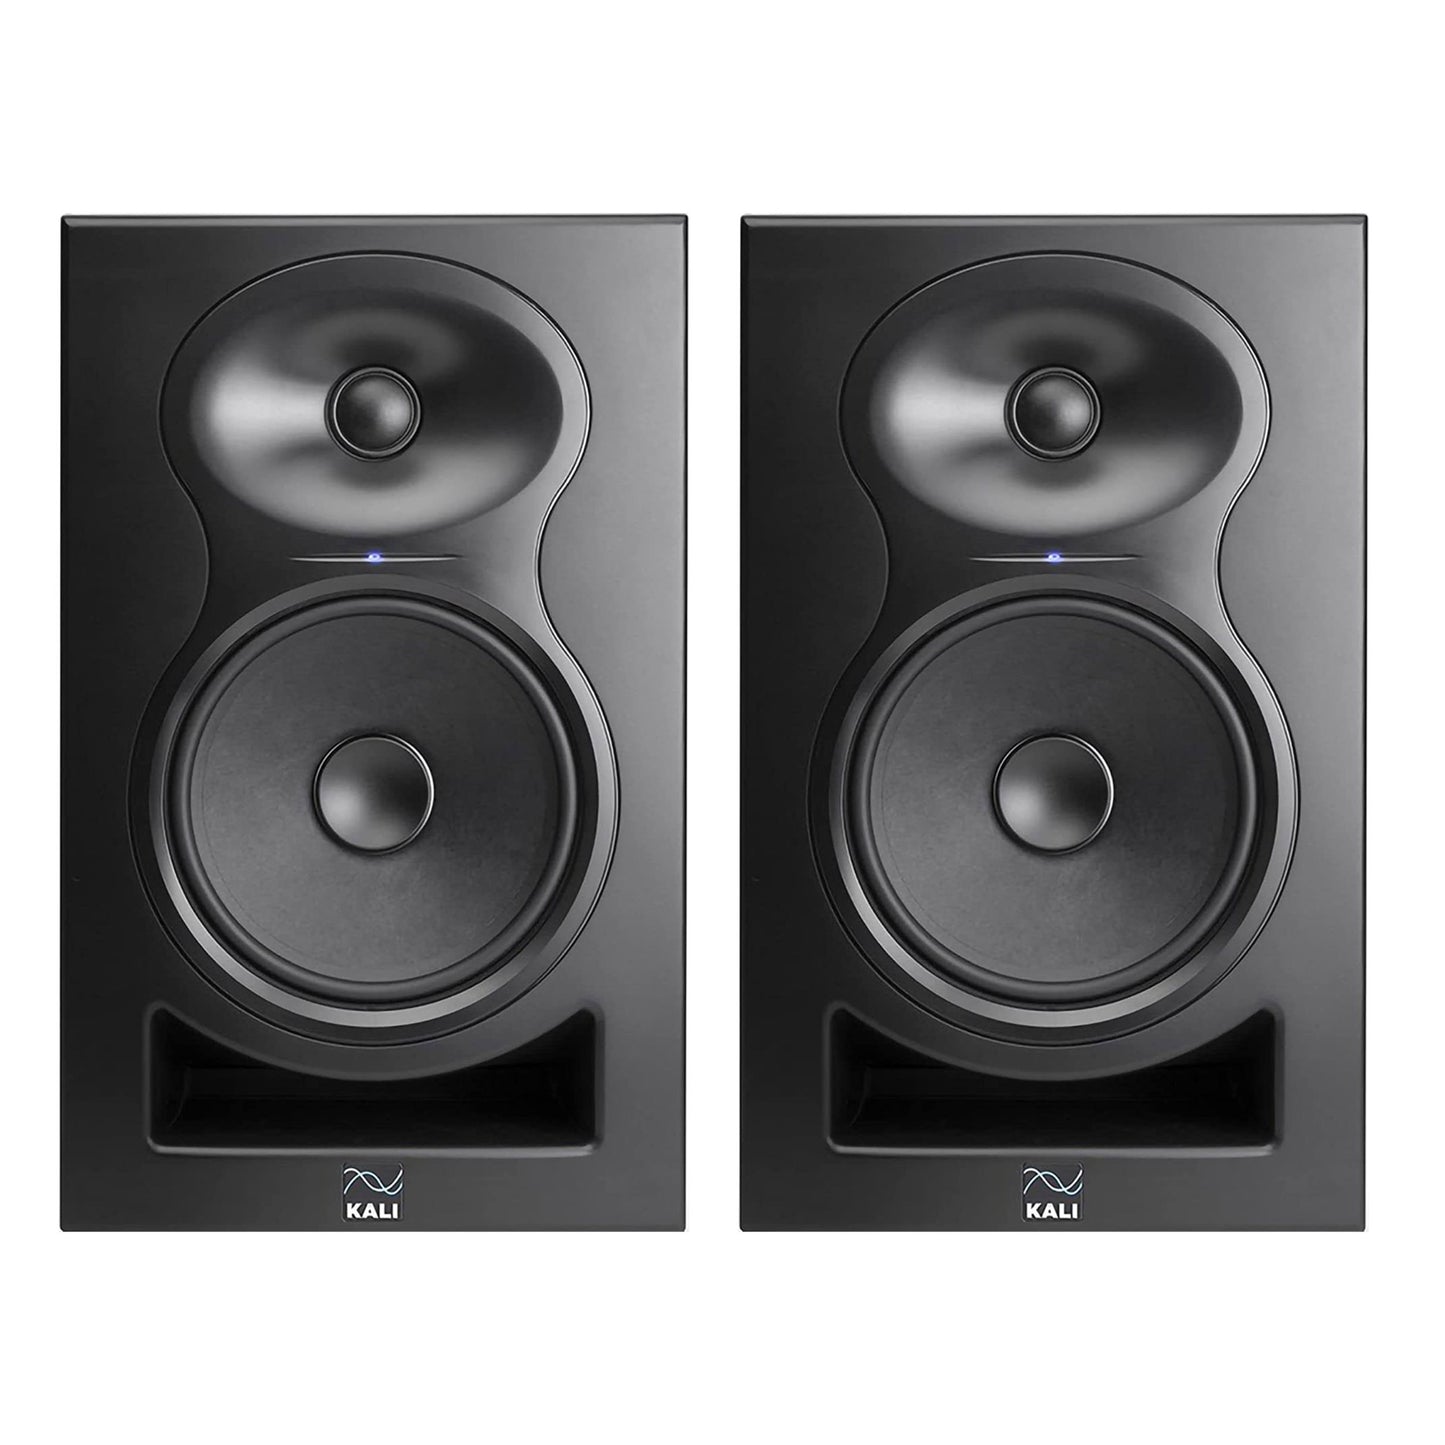 Kali Audio MM-6 6” Multimedia Speaker